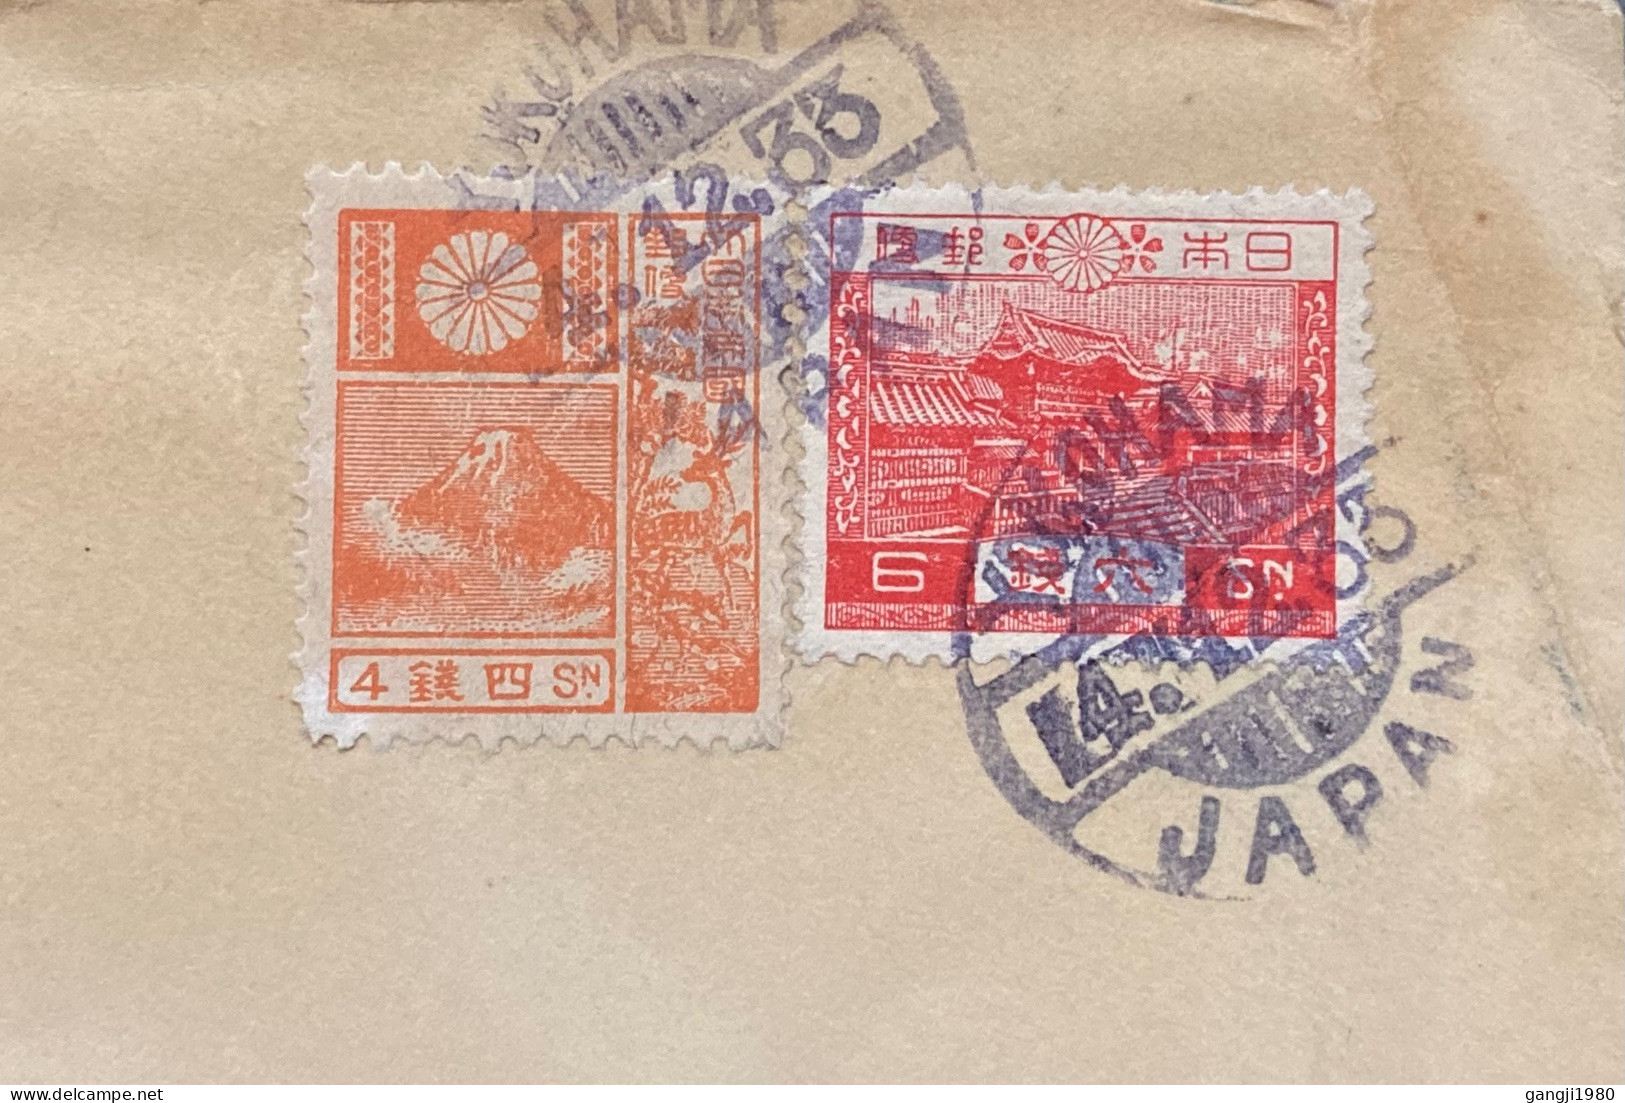 JAPAN 1933, COVER USED TO USA, 1922 MT, FUJI. & DEER, 1926 TIMER GATE STAMP, YOKOHAMA CITY CANCEL. - Briefe U. Dokumente